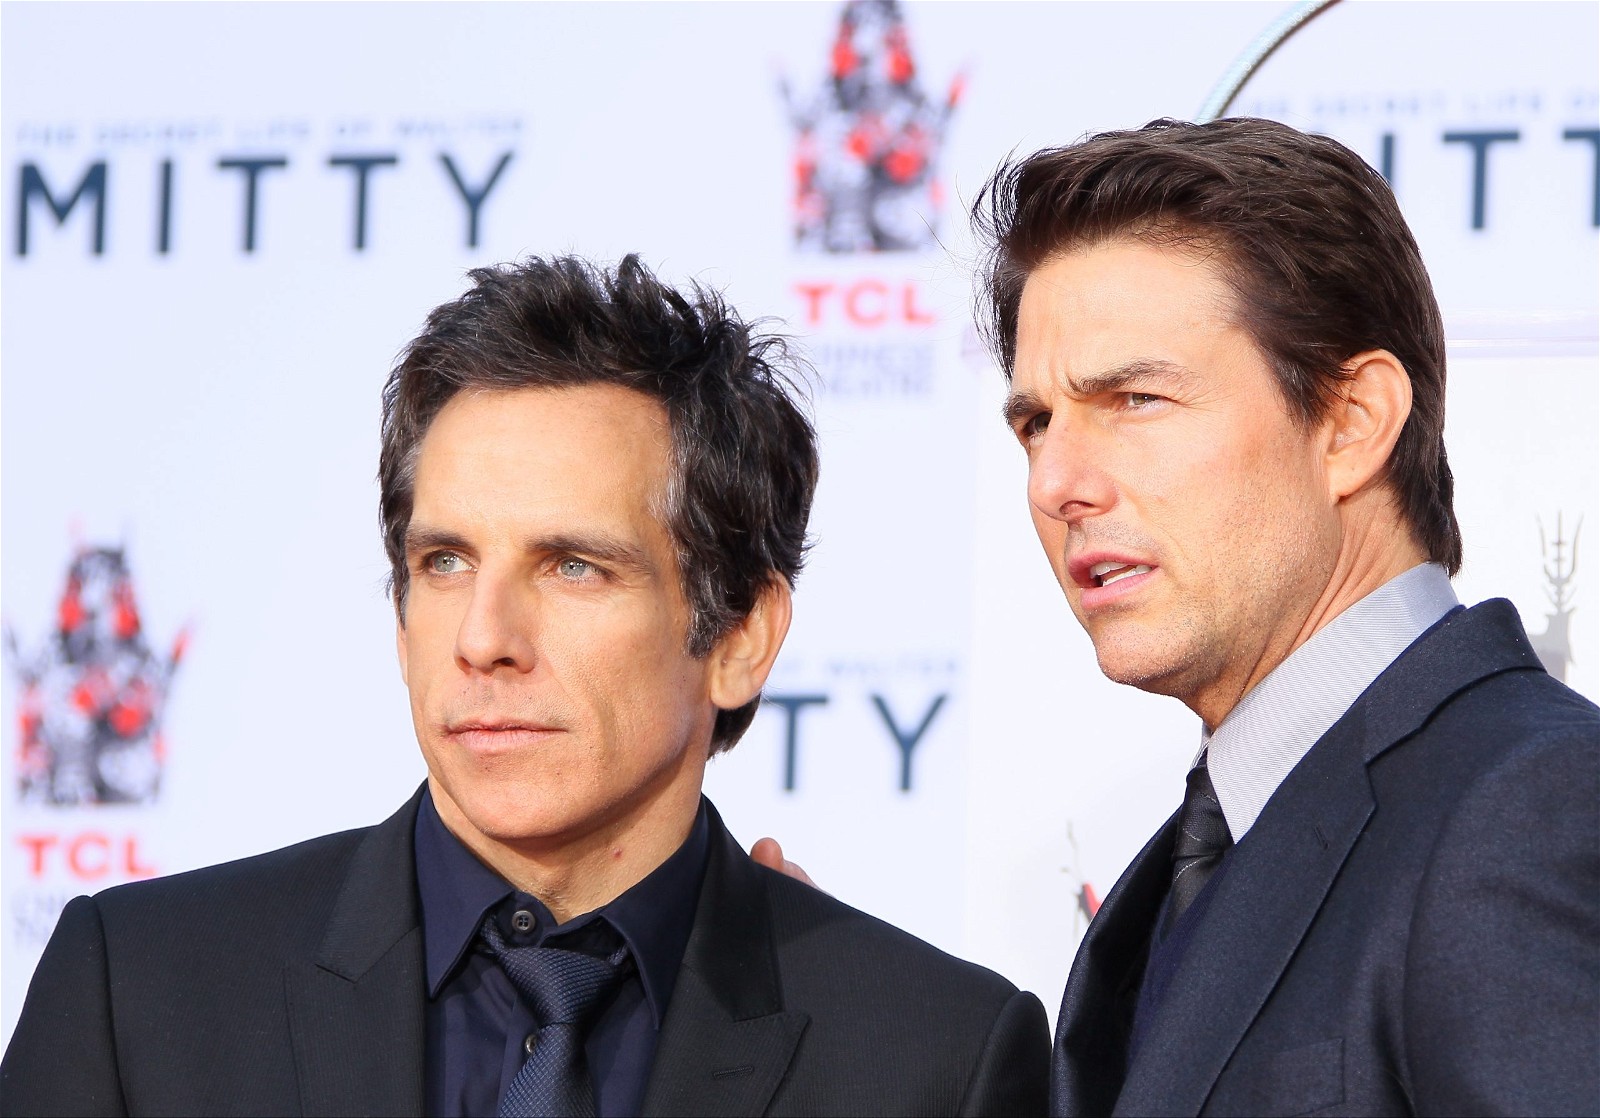 Tom Cruise and Ben Stiller